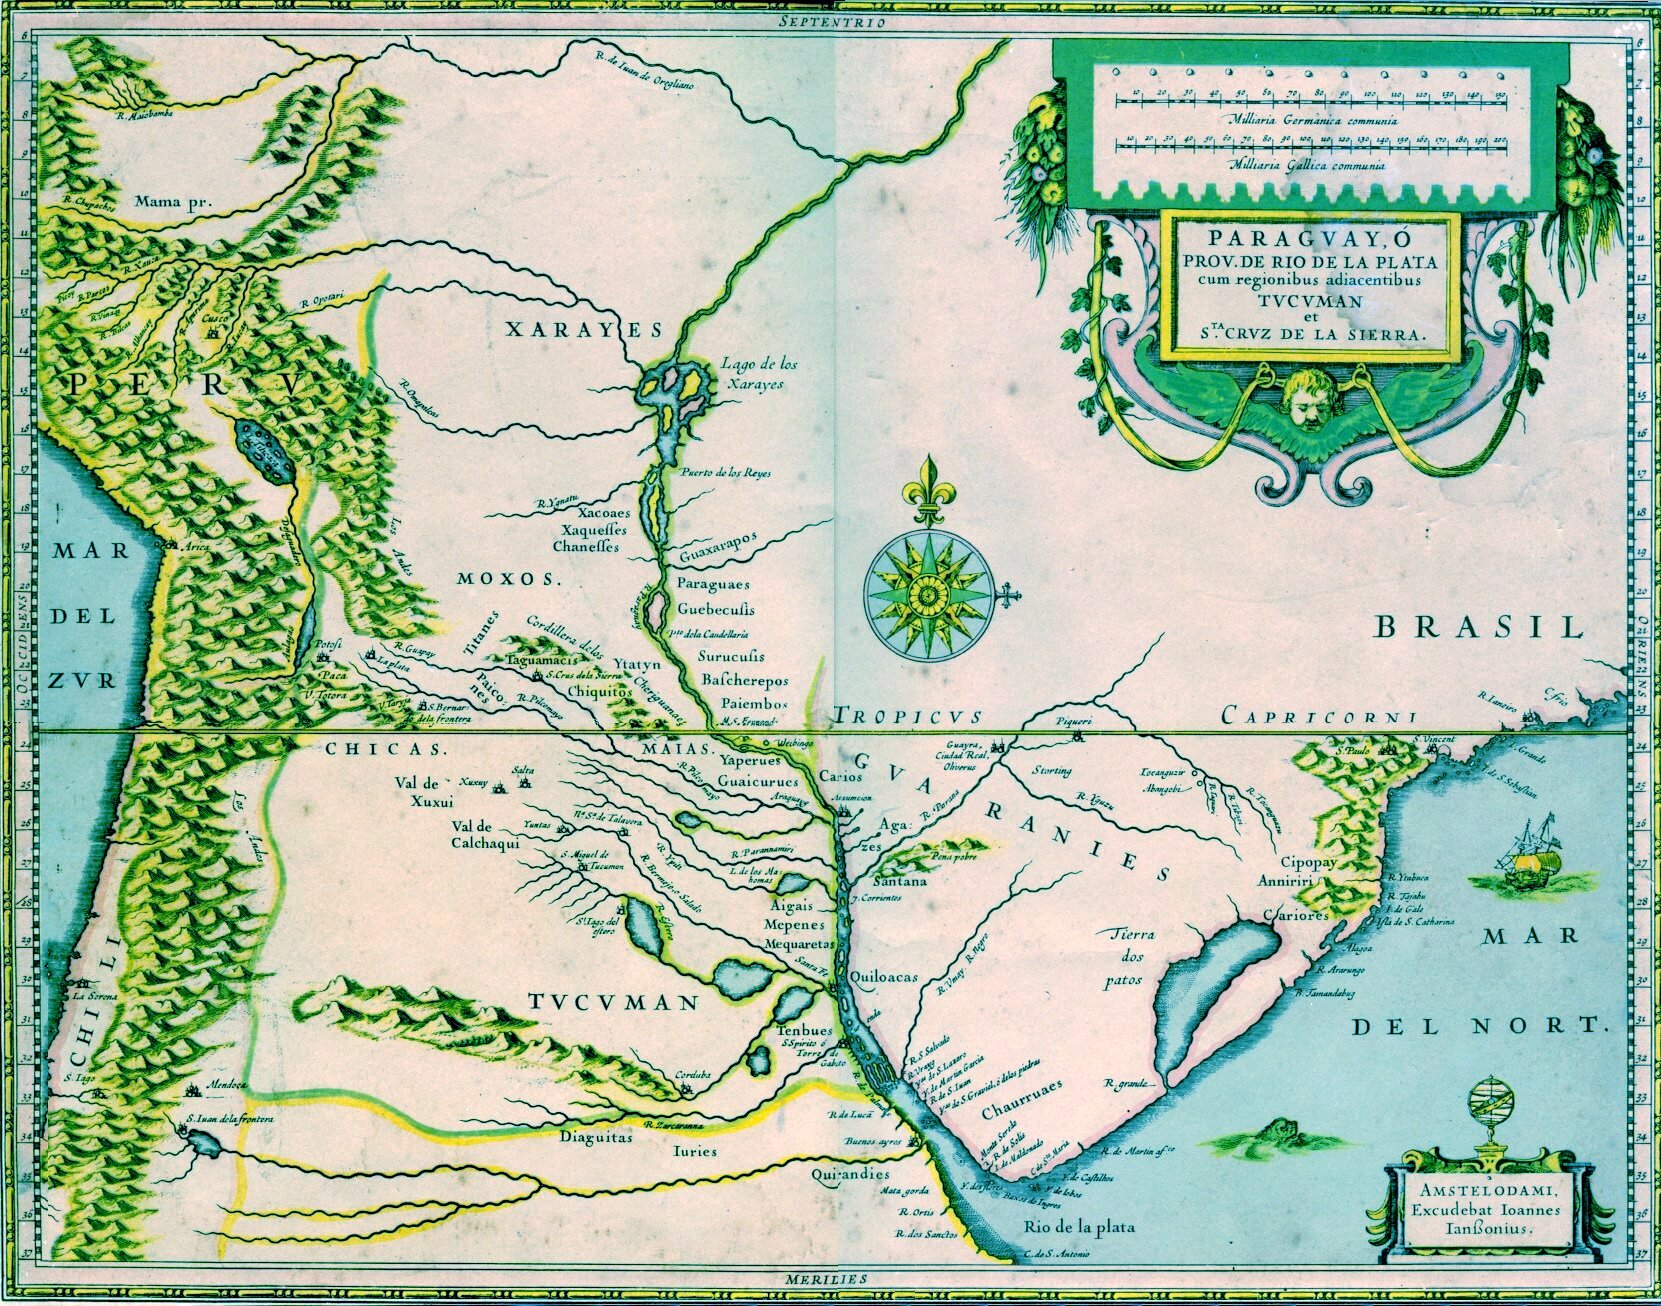 Mapa, kterou vytvořil kolem roku 1600 Jodocus Hondius znázorňuje oblast Moxos a údajnou lagunu Laguna de los Xarayes.